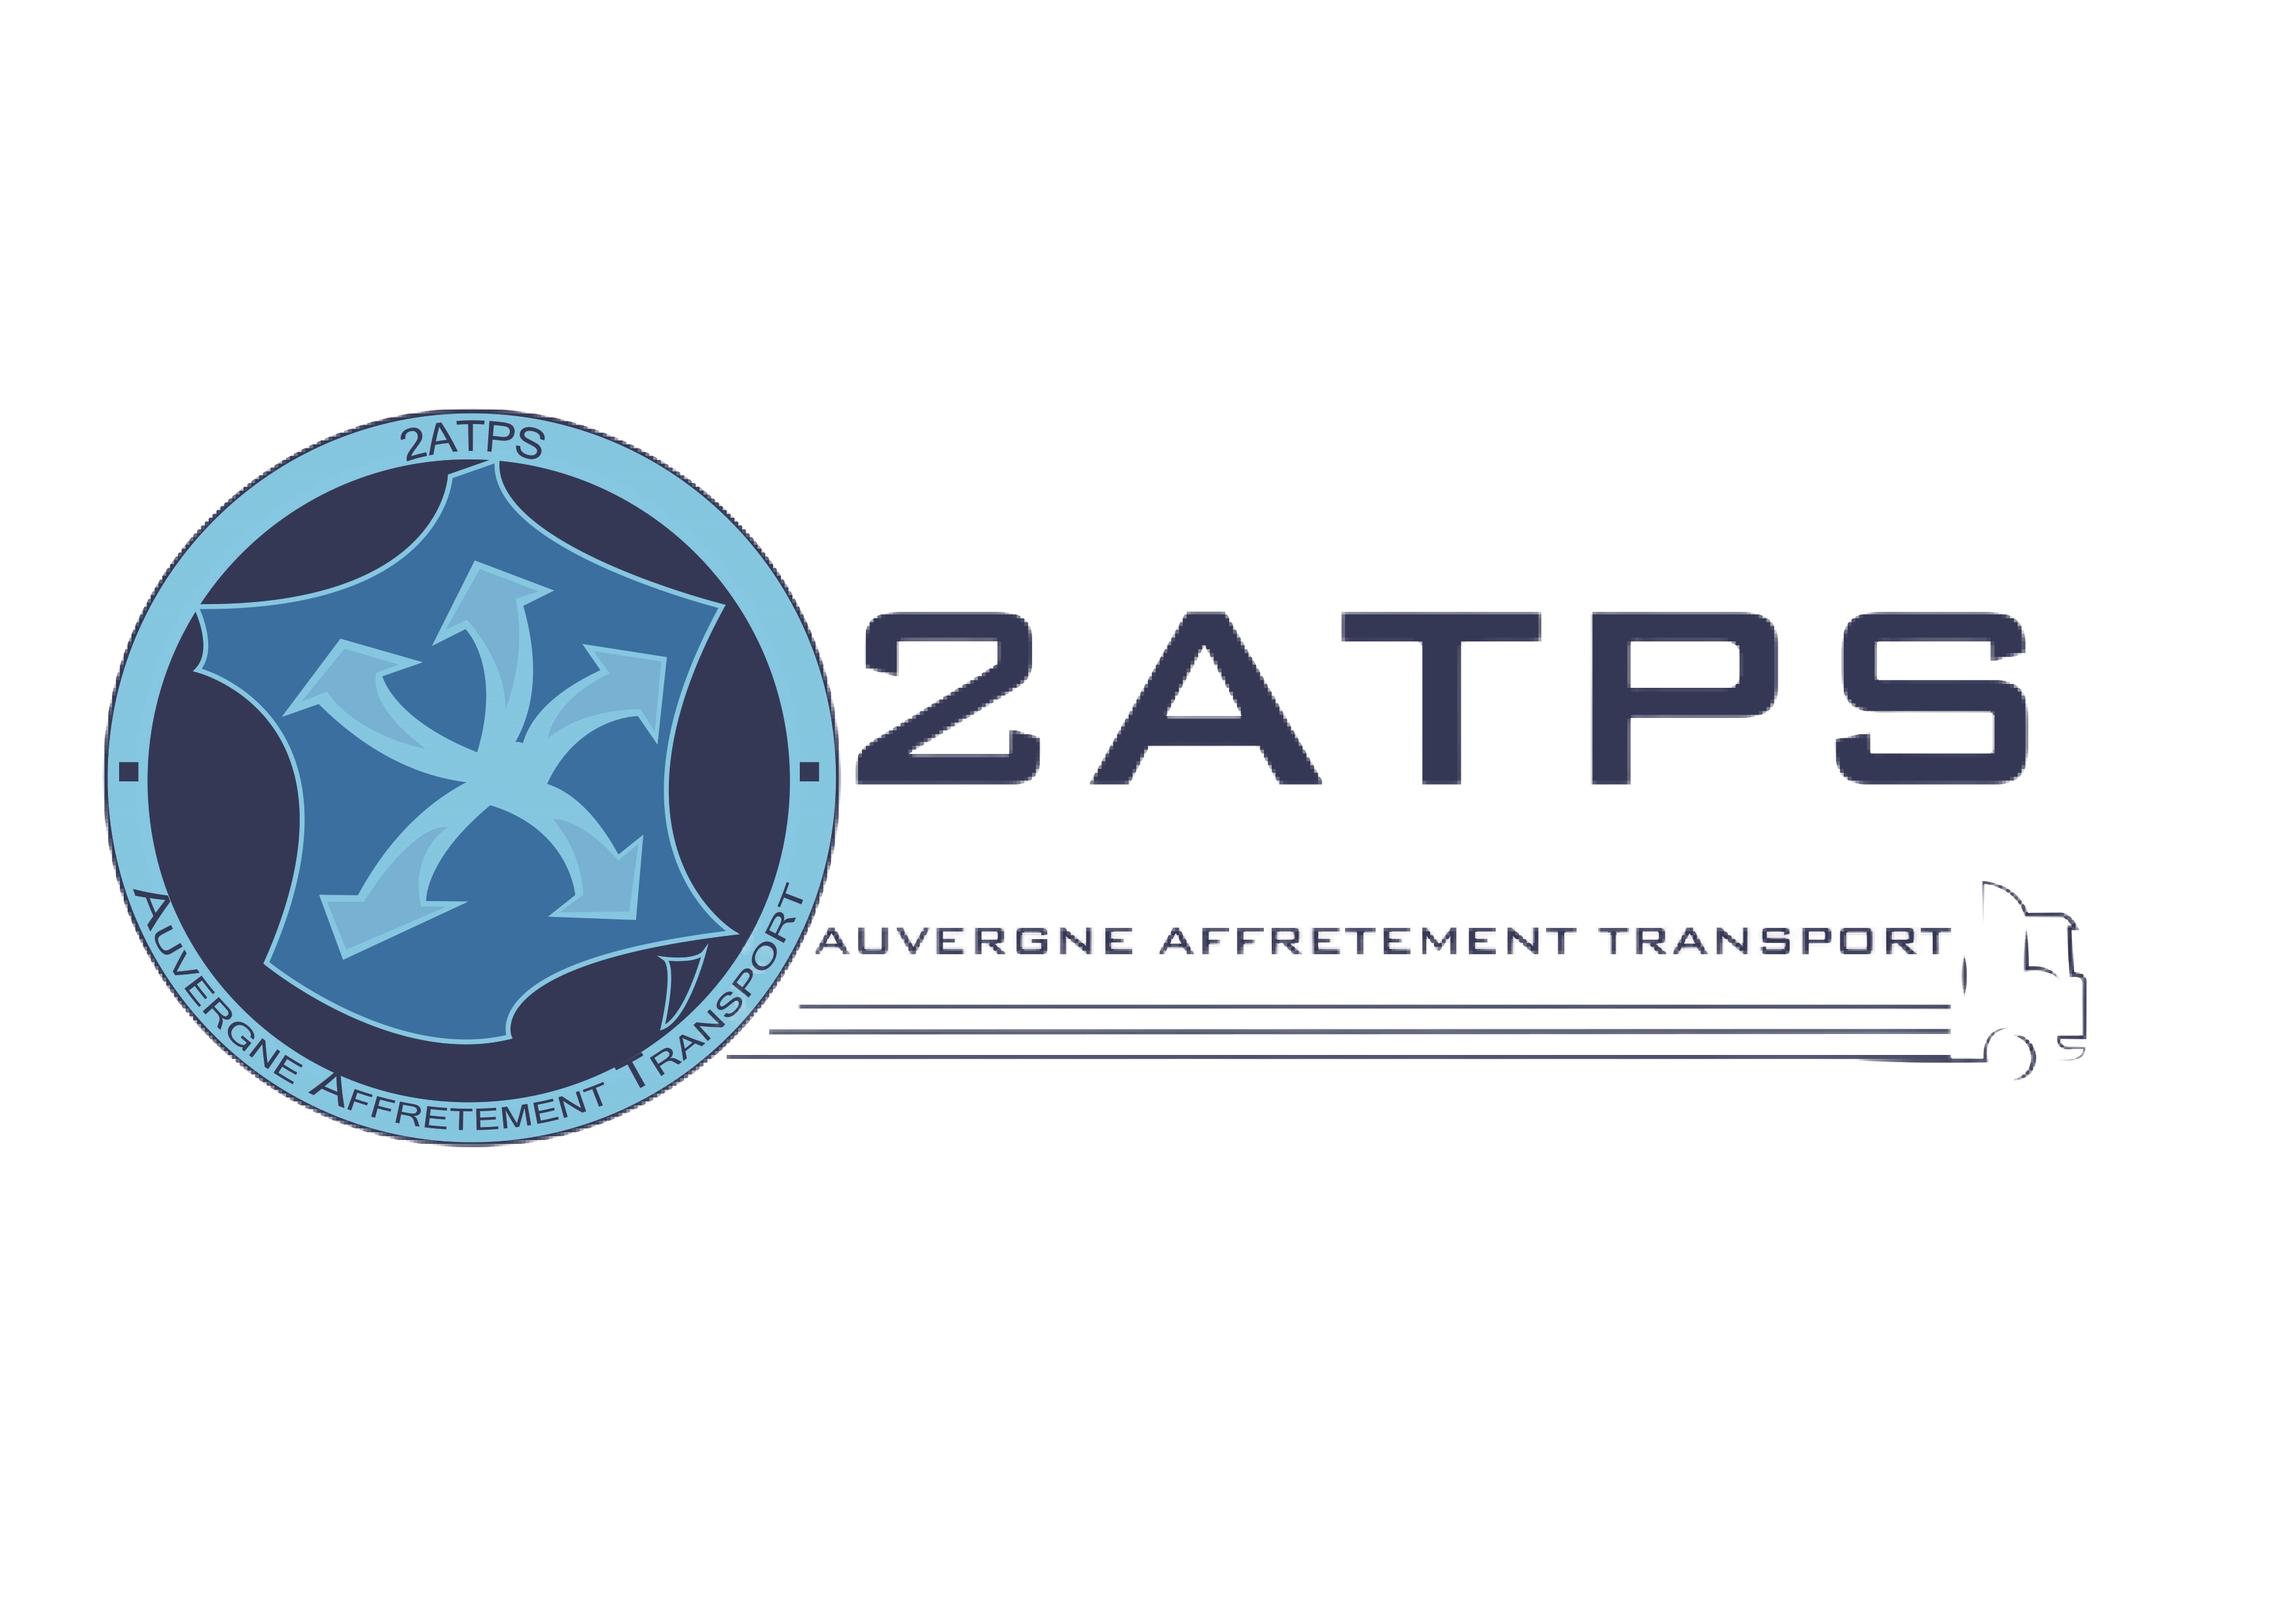 logo 2ATPS